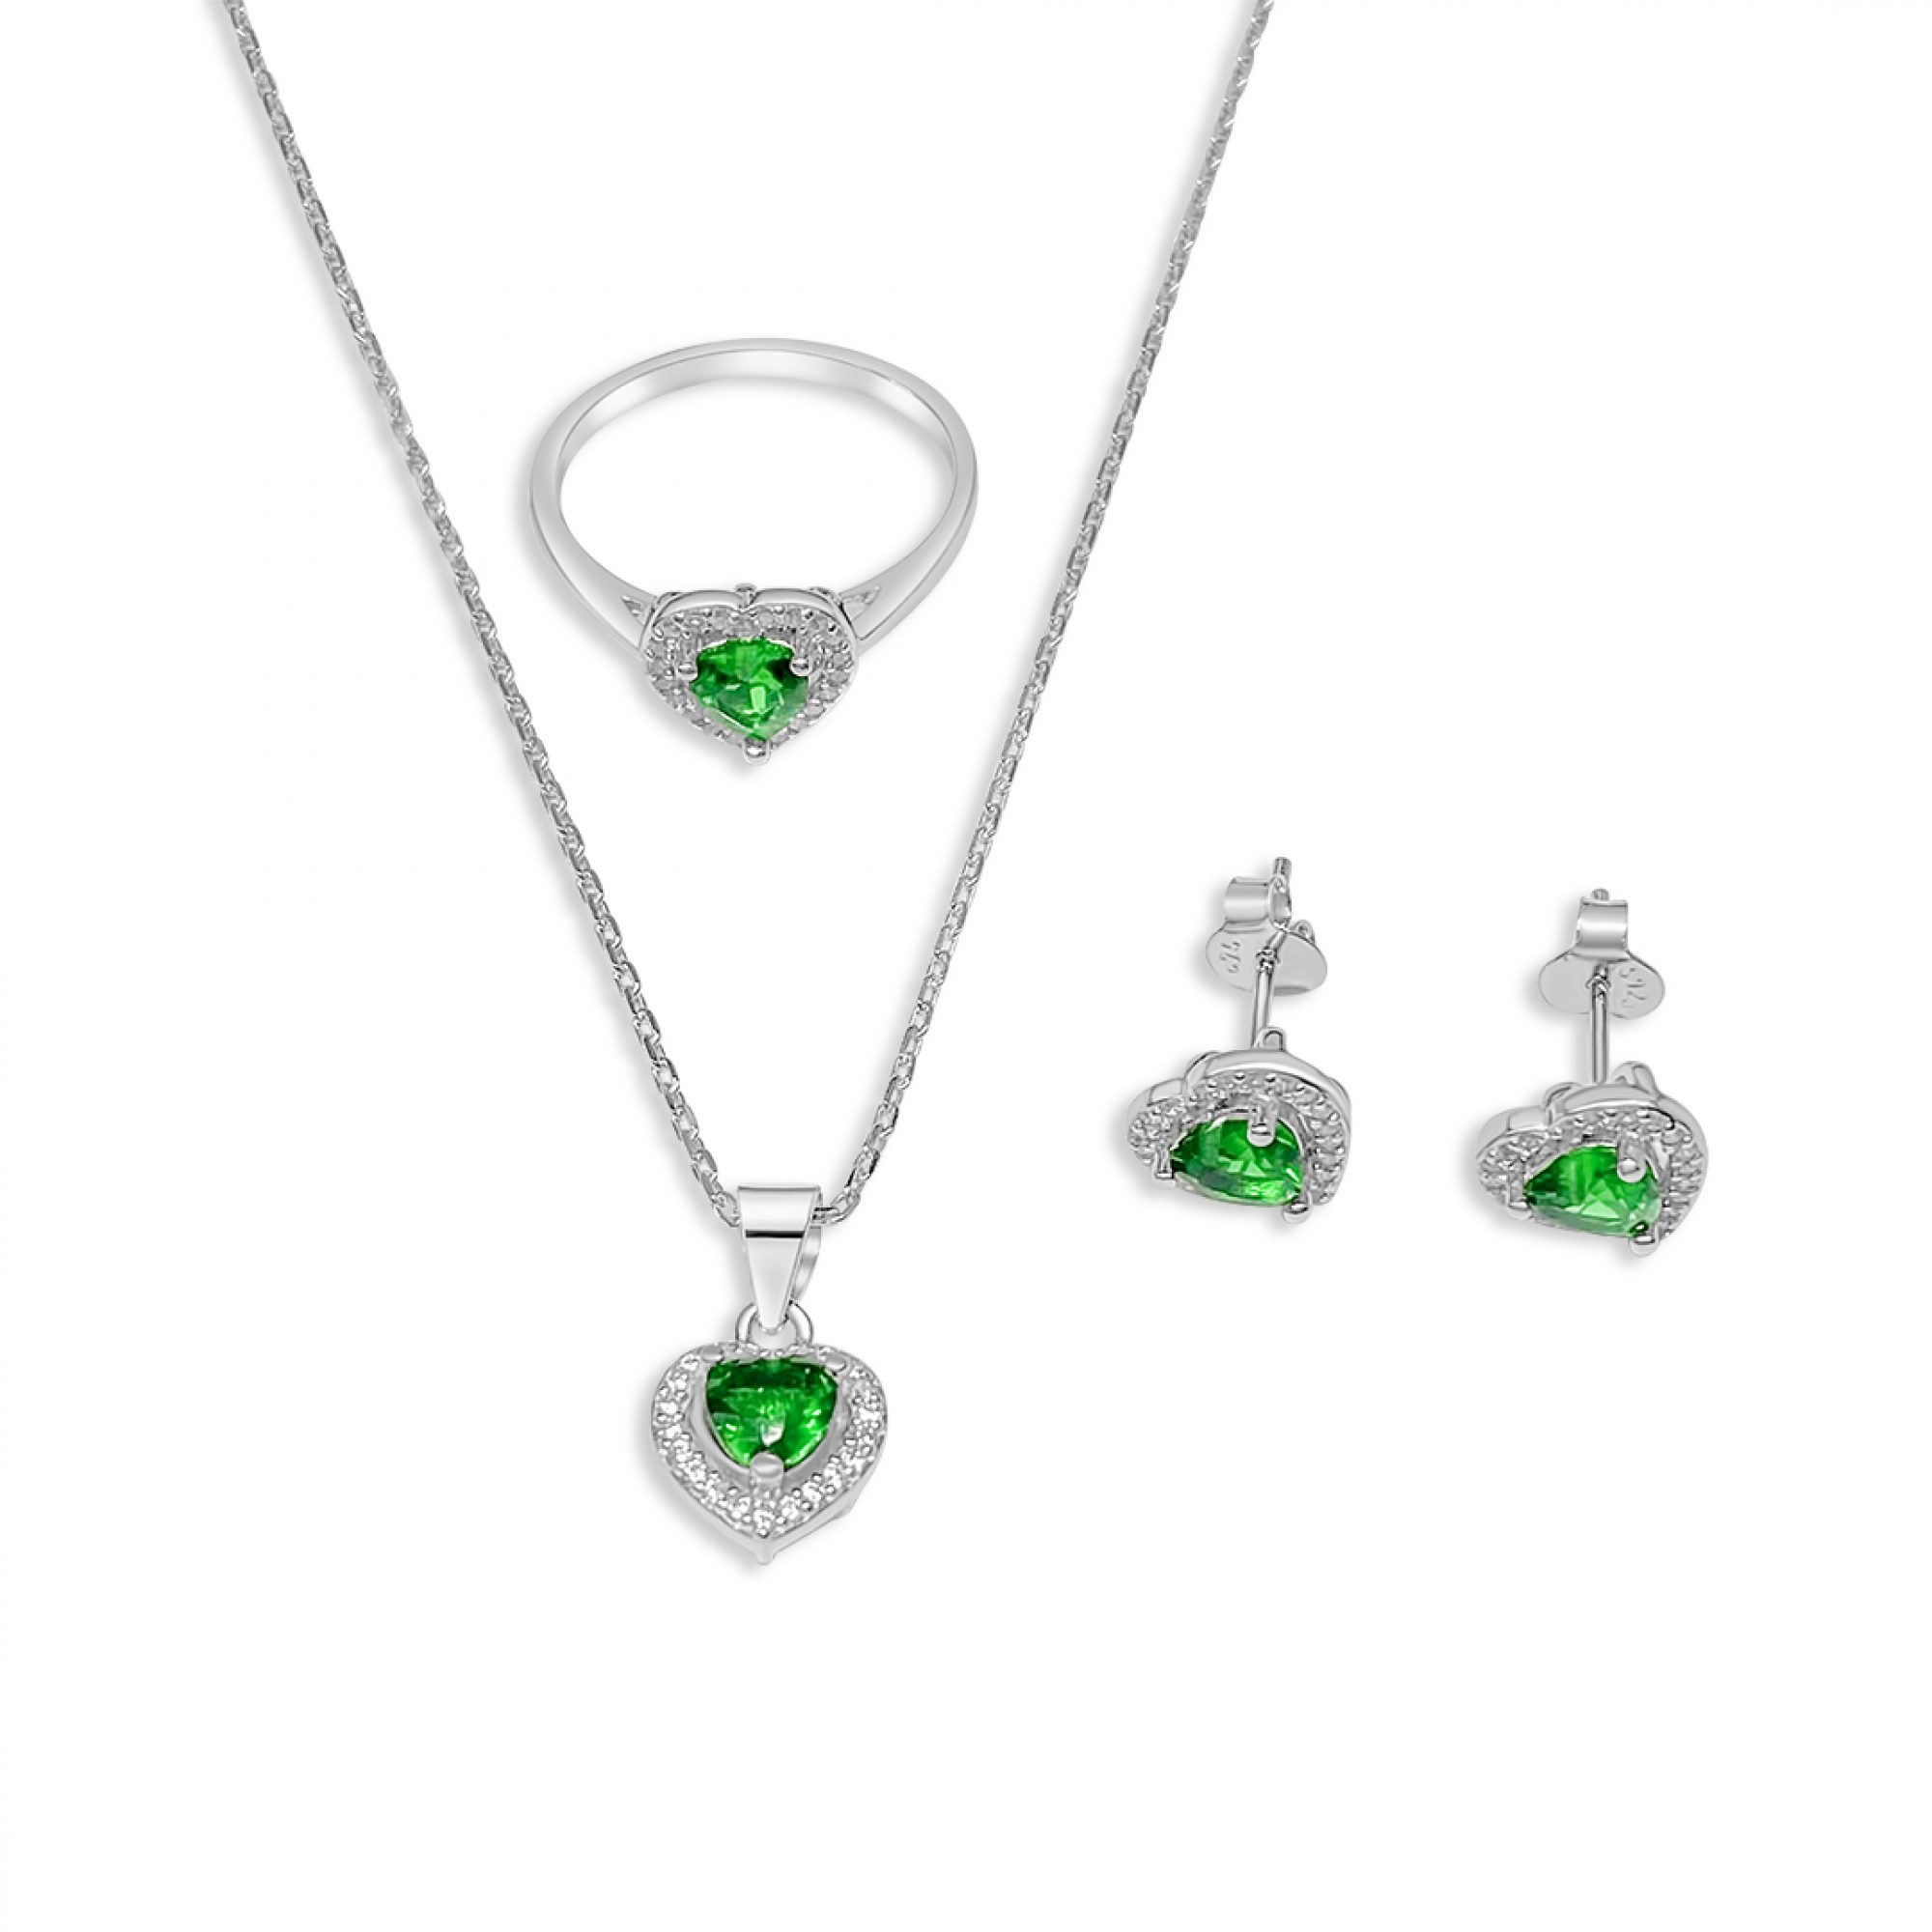 Set with emerald and zircon stones